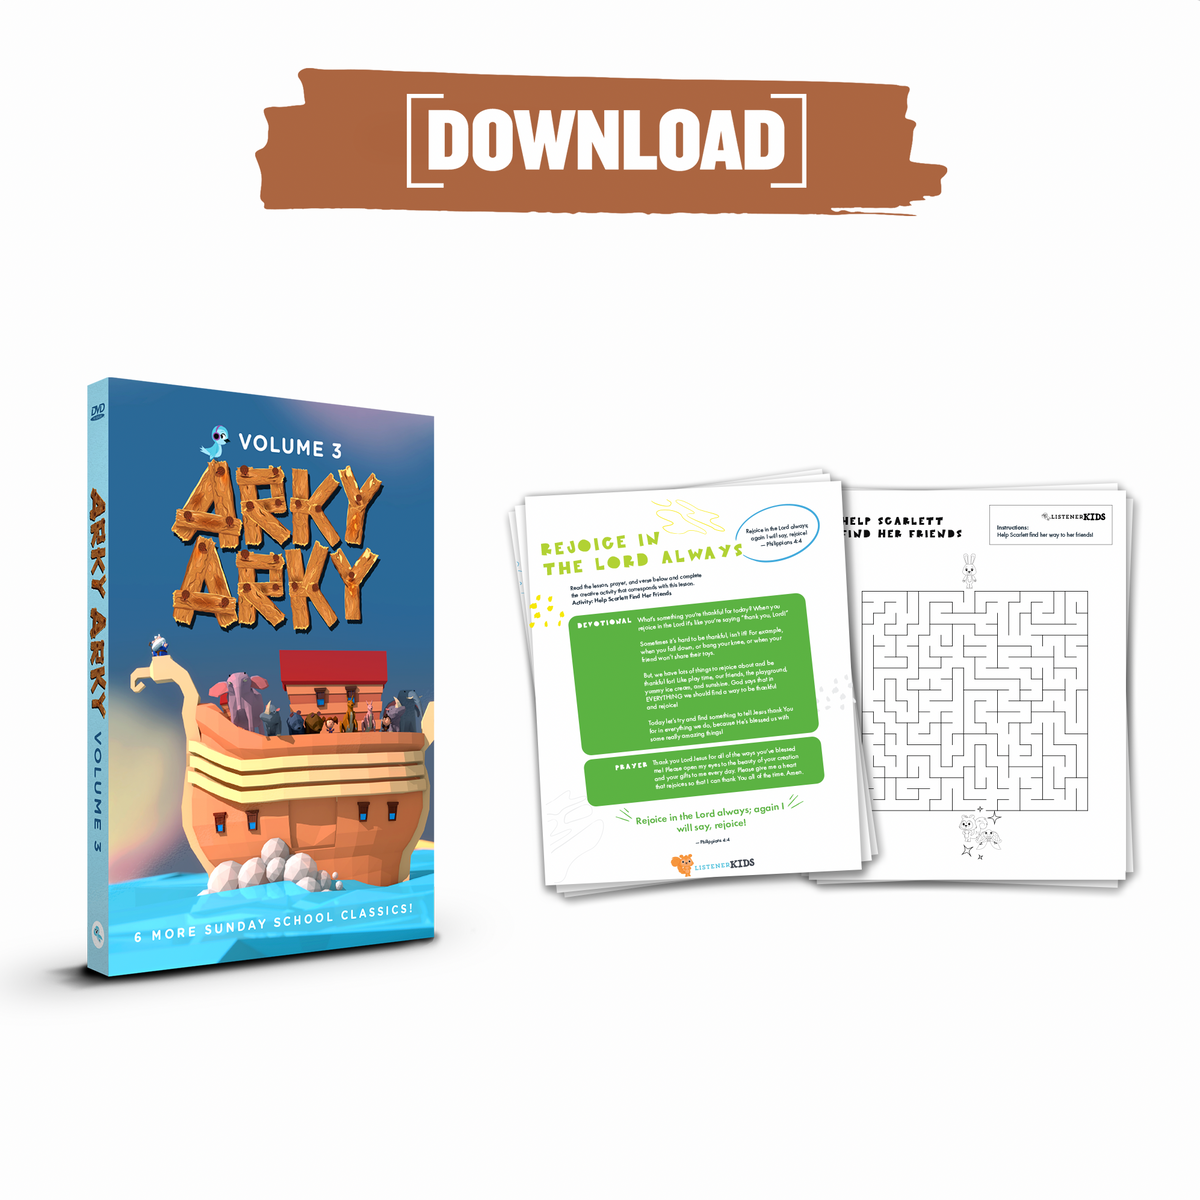 Premium Download: [Vol 3] Arky Arky Videos + Bible Studies